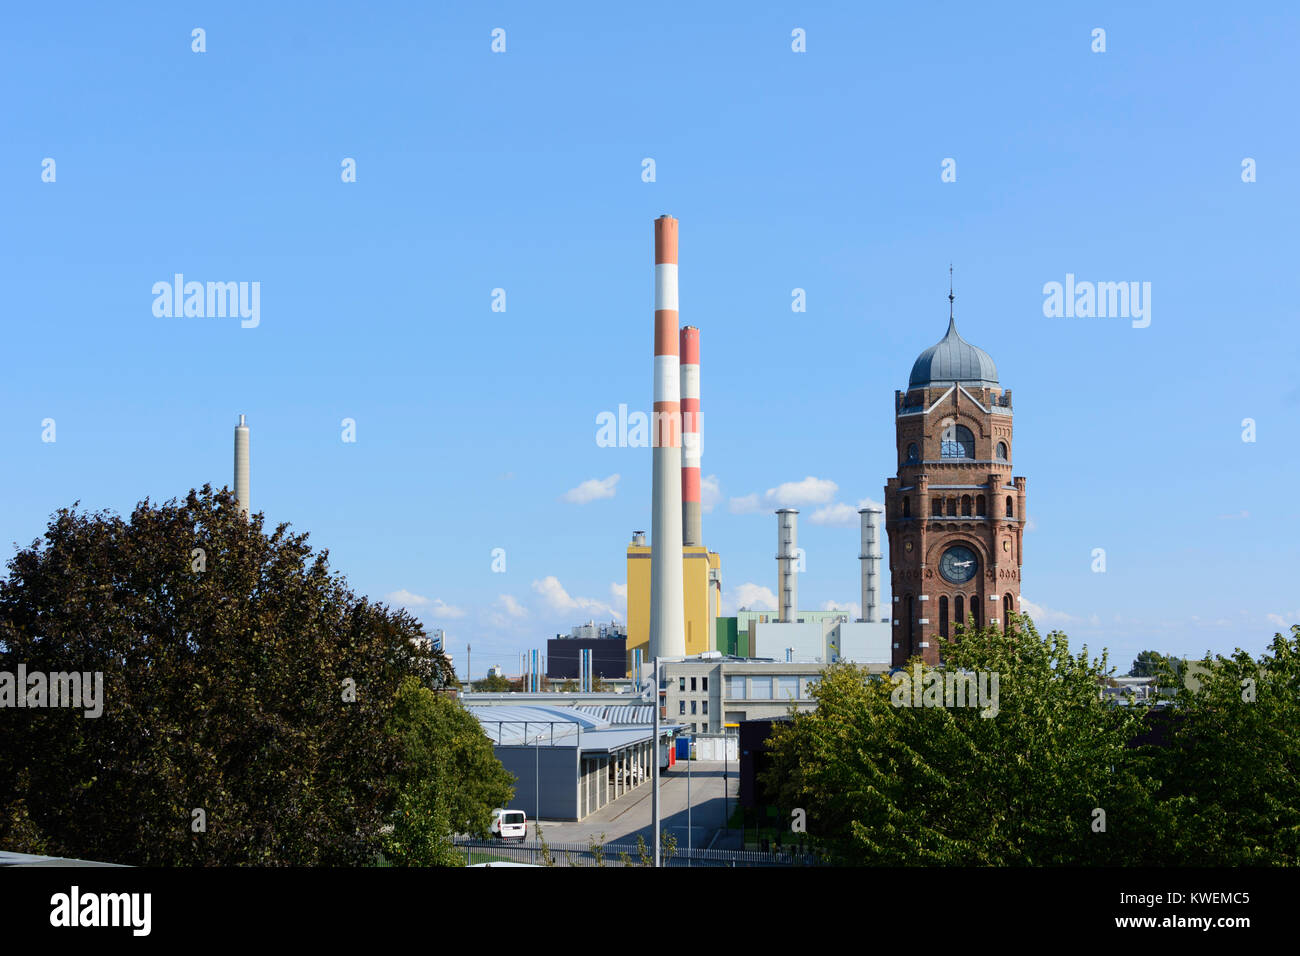 Wien, Vienna: Gaswerk Simmering gas works water tower and chimneys, 11. Simmering, Wien, Austria Stock Photo